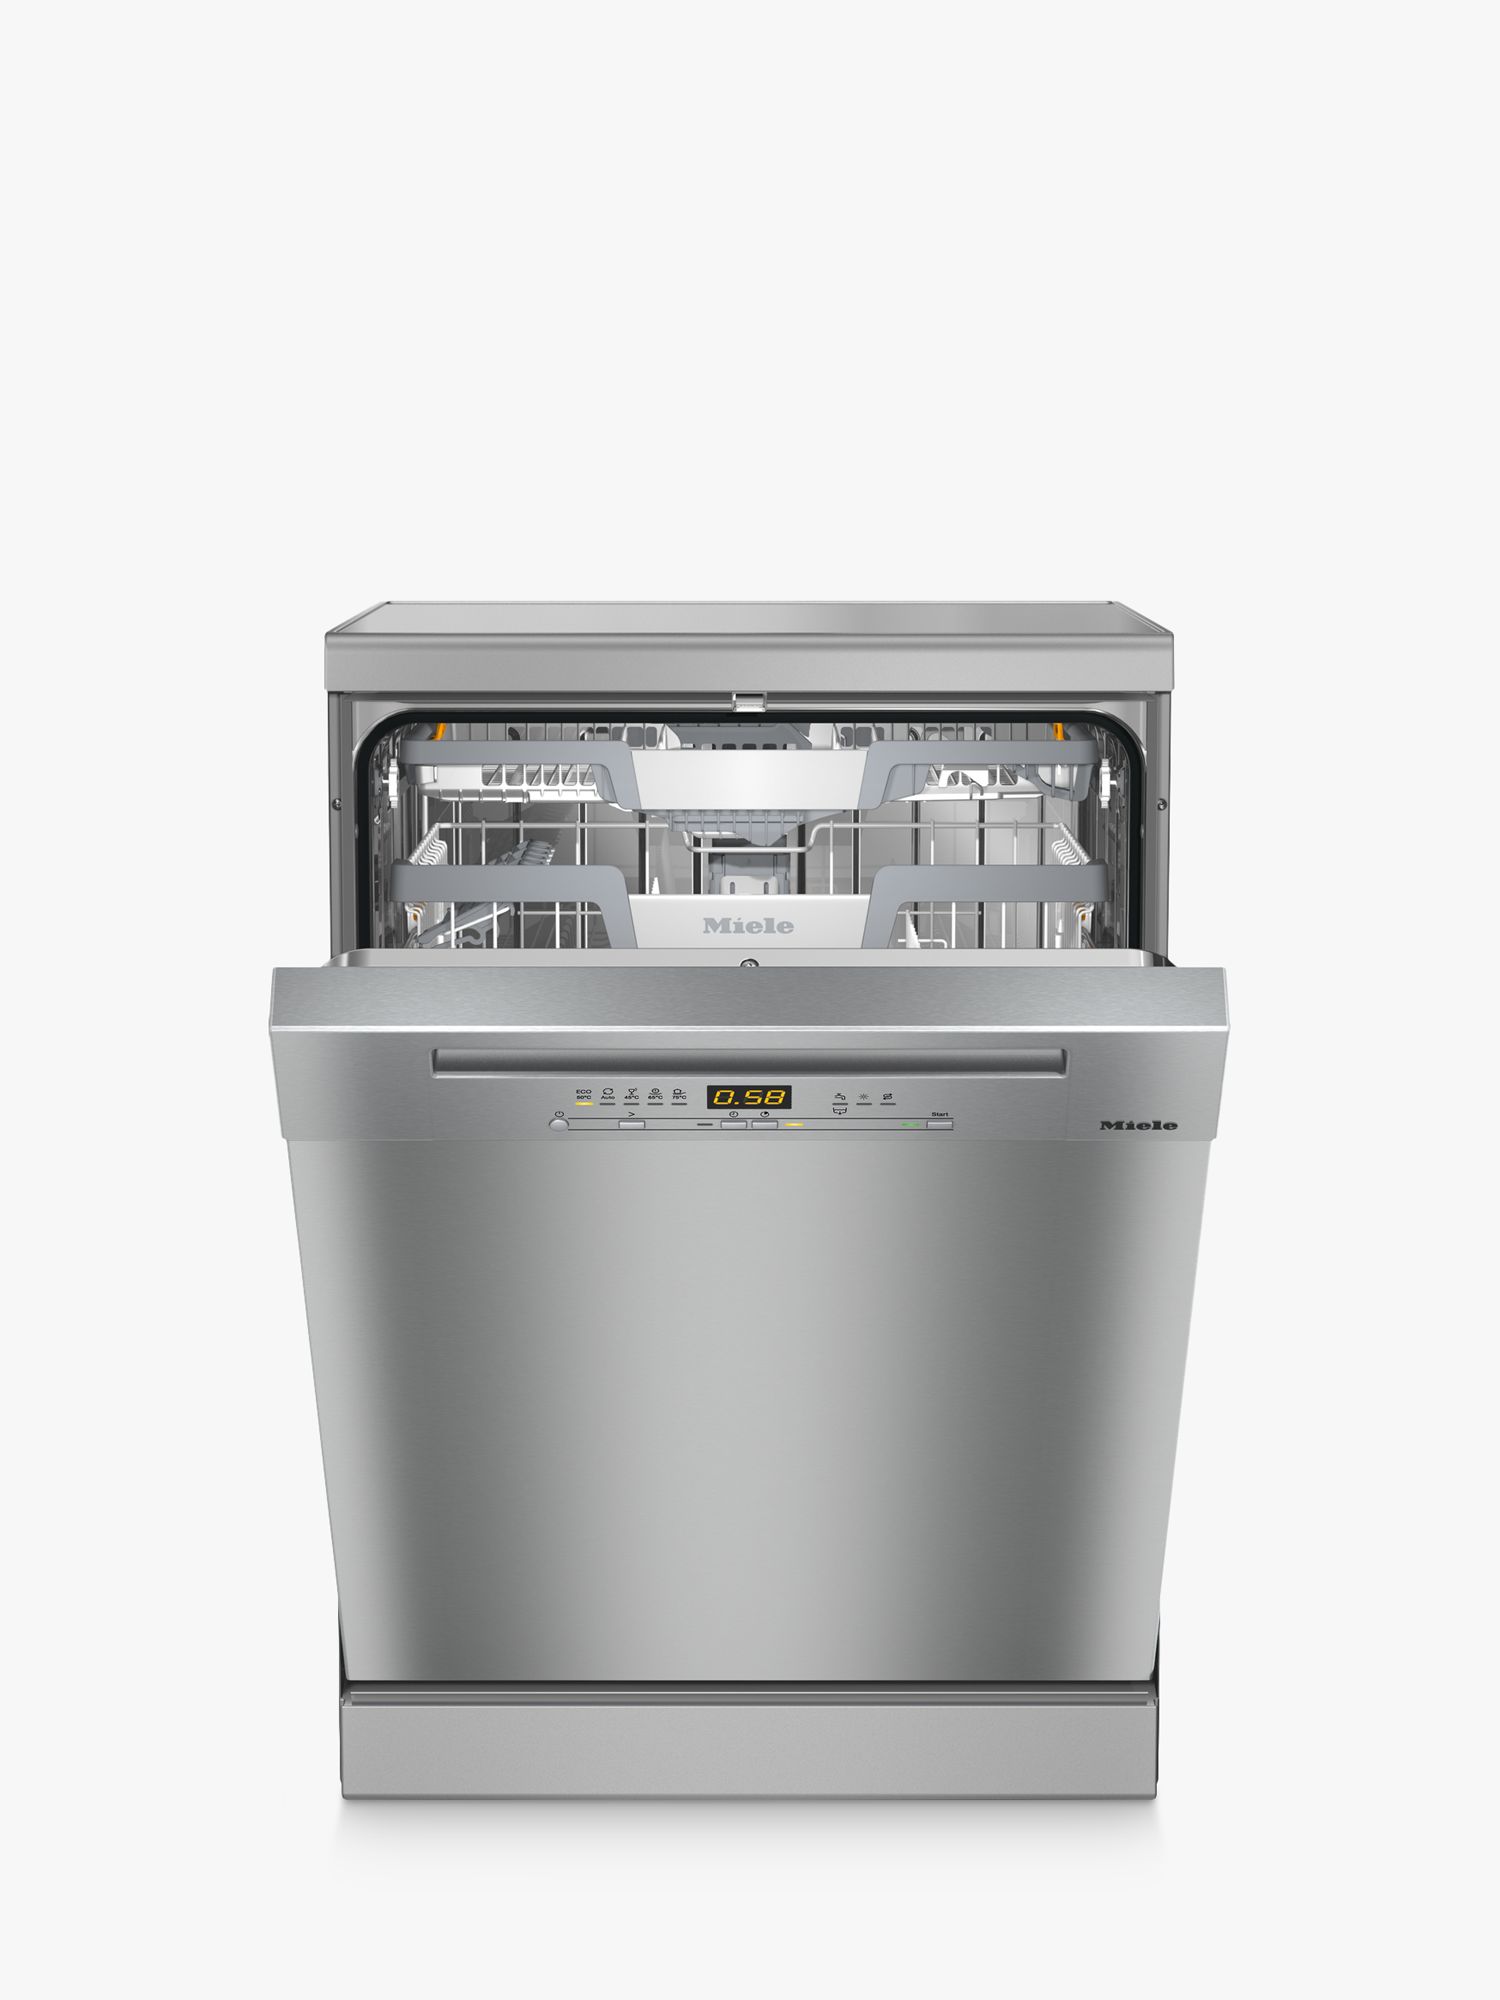 g4930sc clst freestanding dishwasher